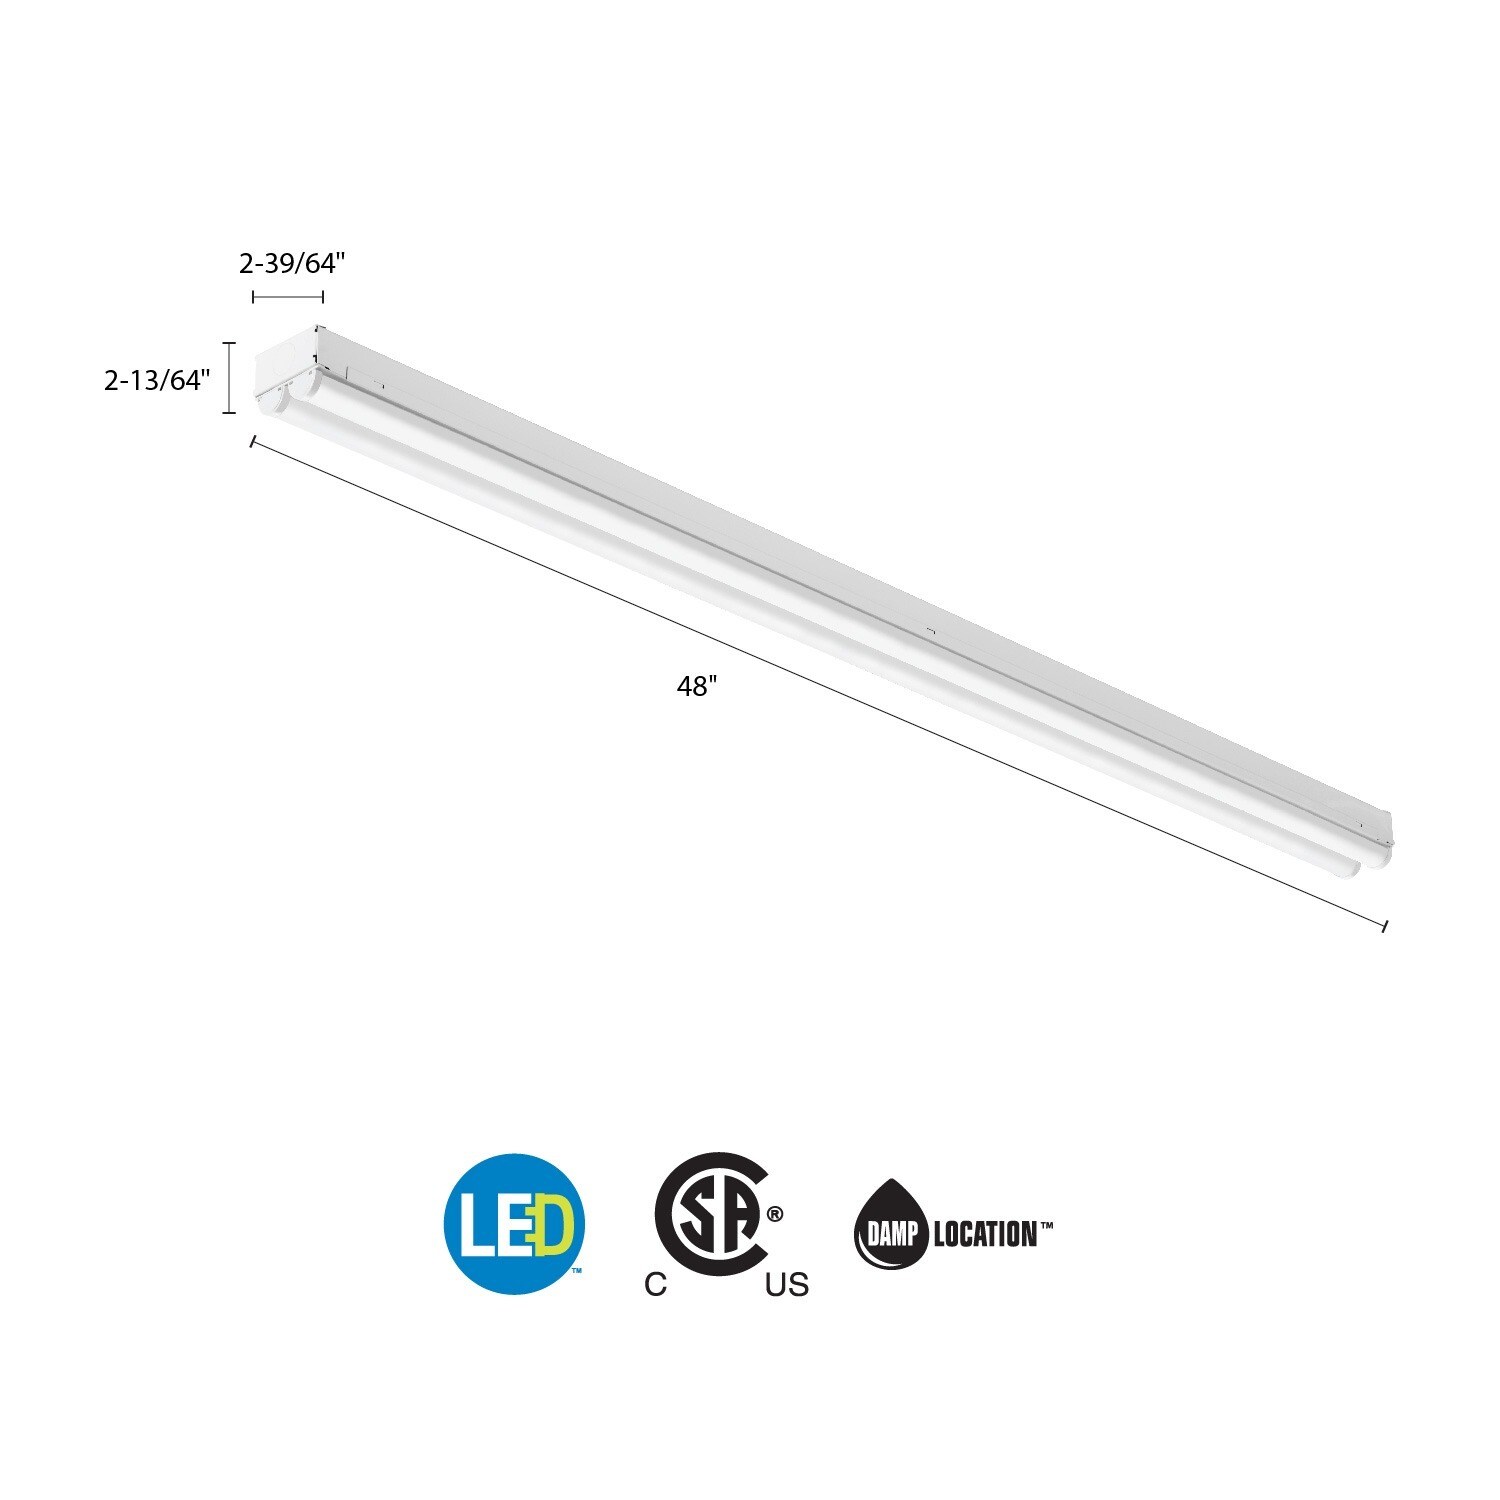 Lithonia Lighting CMNS L48 2LL 120V 840 4-Foot 2-Light White LED Striplight  - Bed Bath & Beyond - 13995817